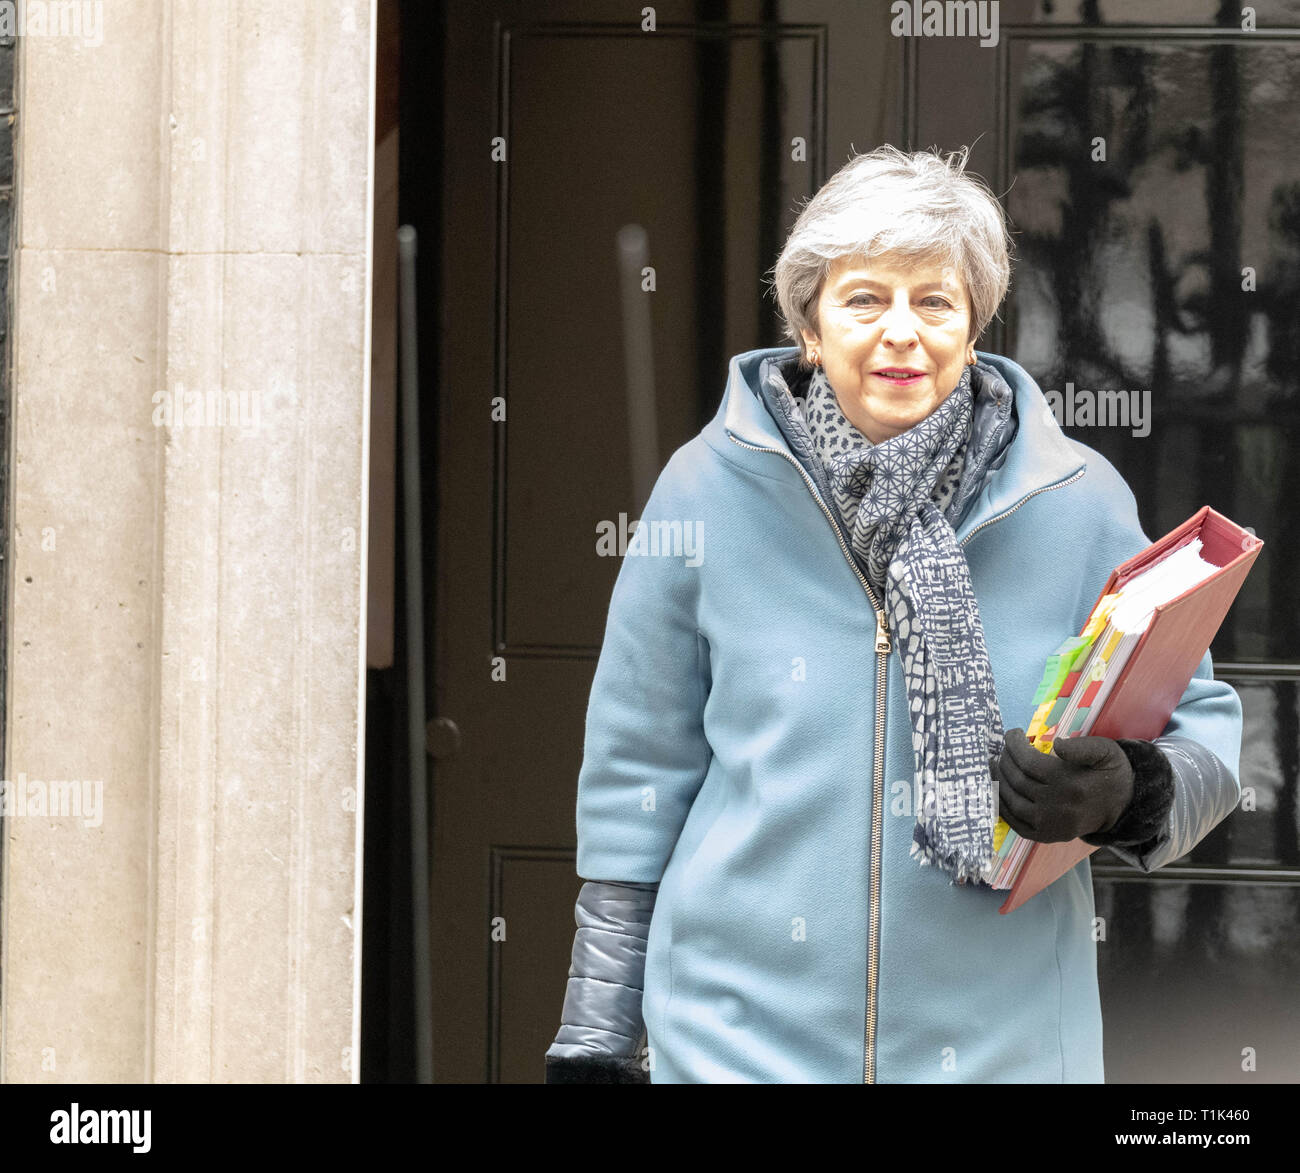 London, Großbritannien. 27. Mär 2019. Theresa May MP PC, Premierminister Blätter 10 Downing Street, London Quelle: Ian Davidson/Alamy leben Nachrichten Stockfoto